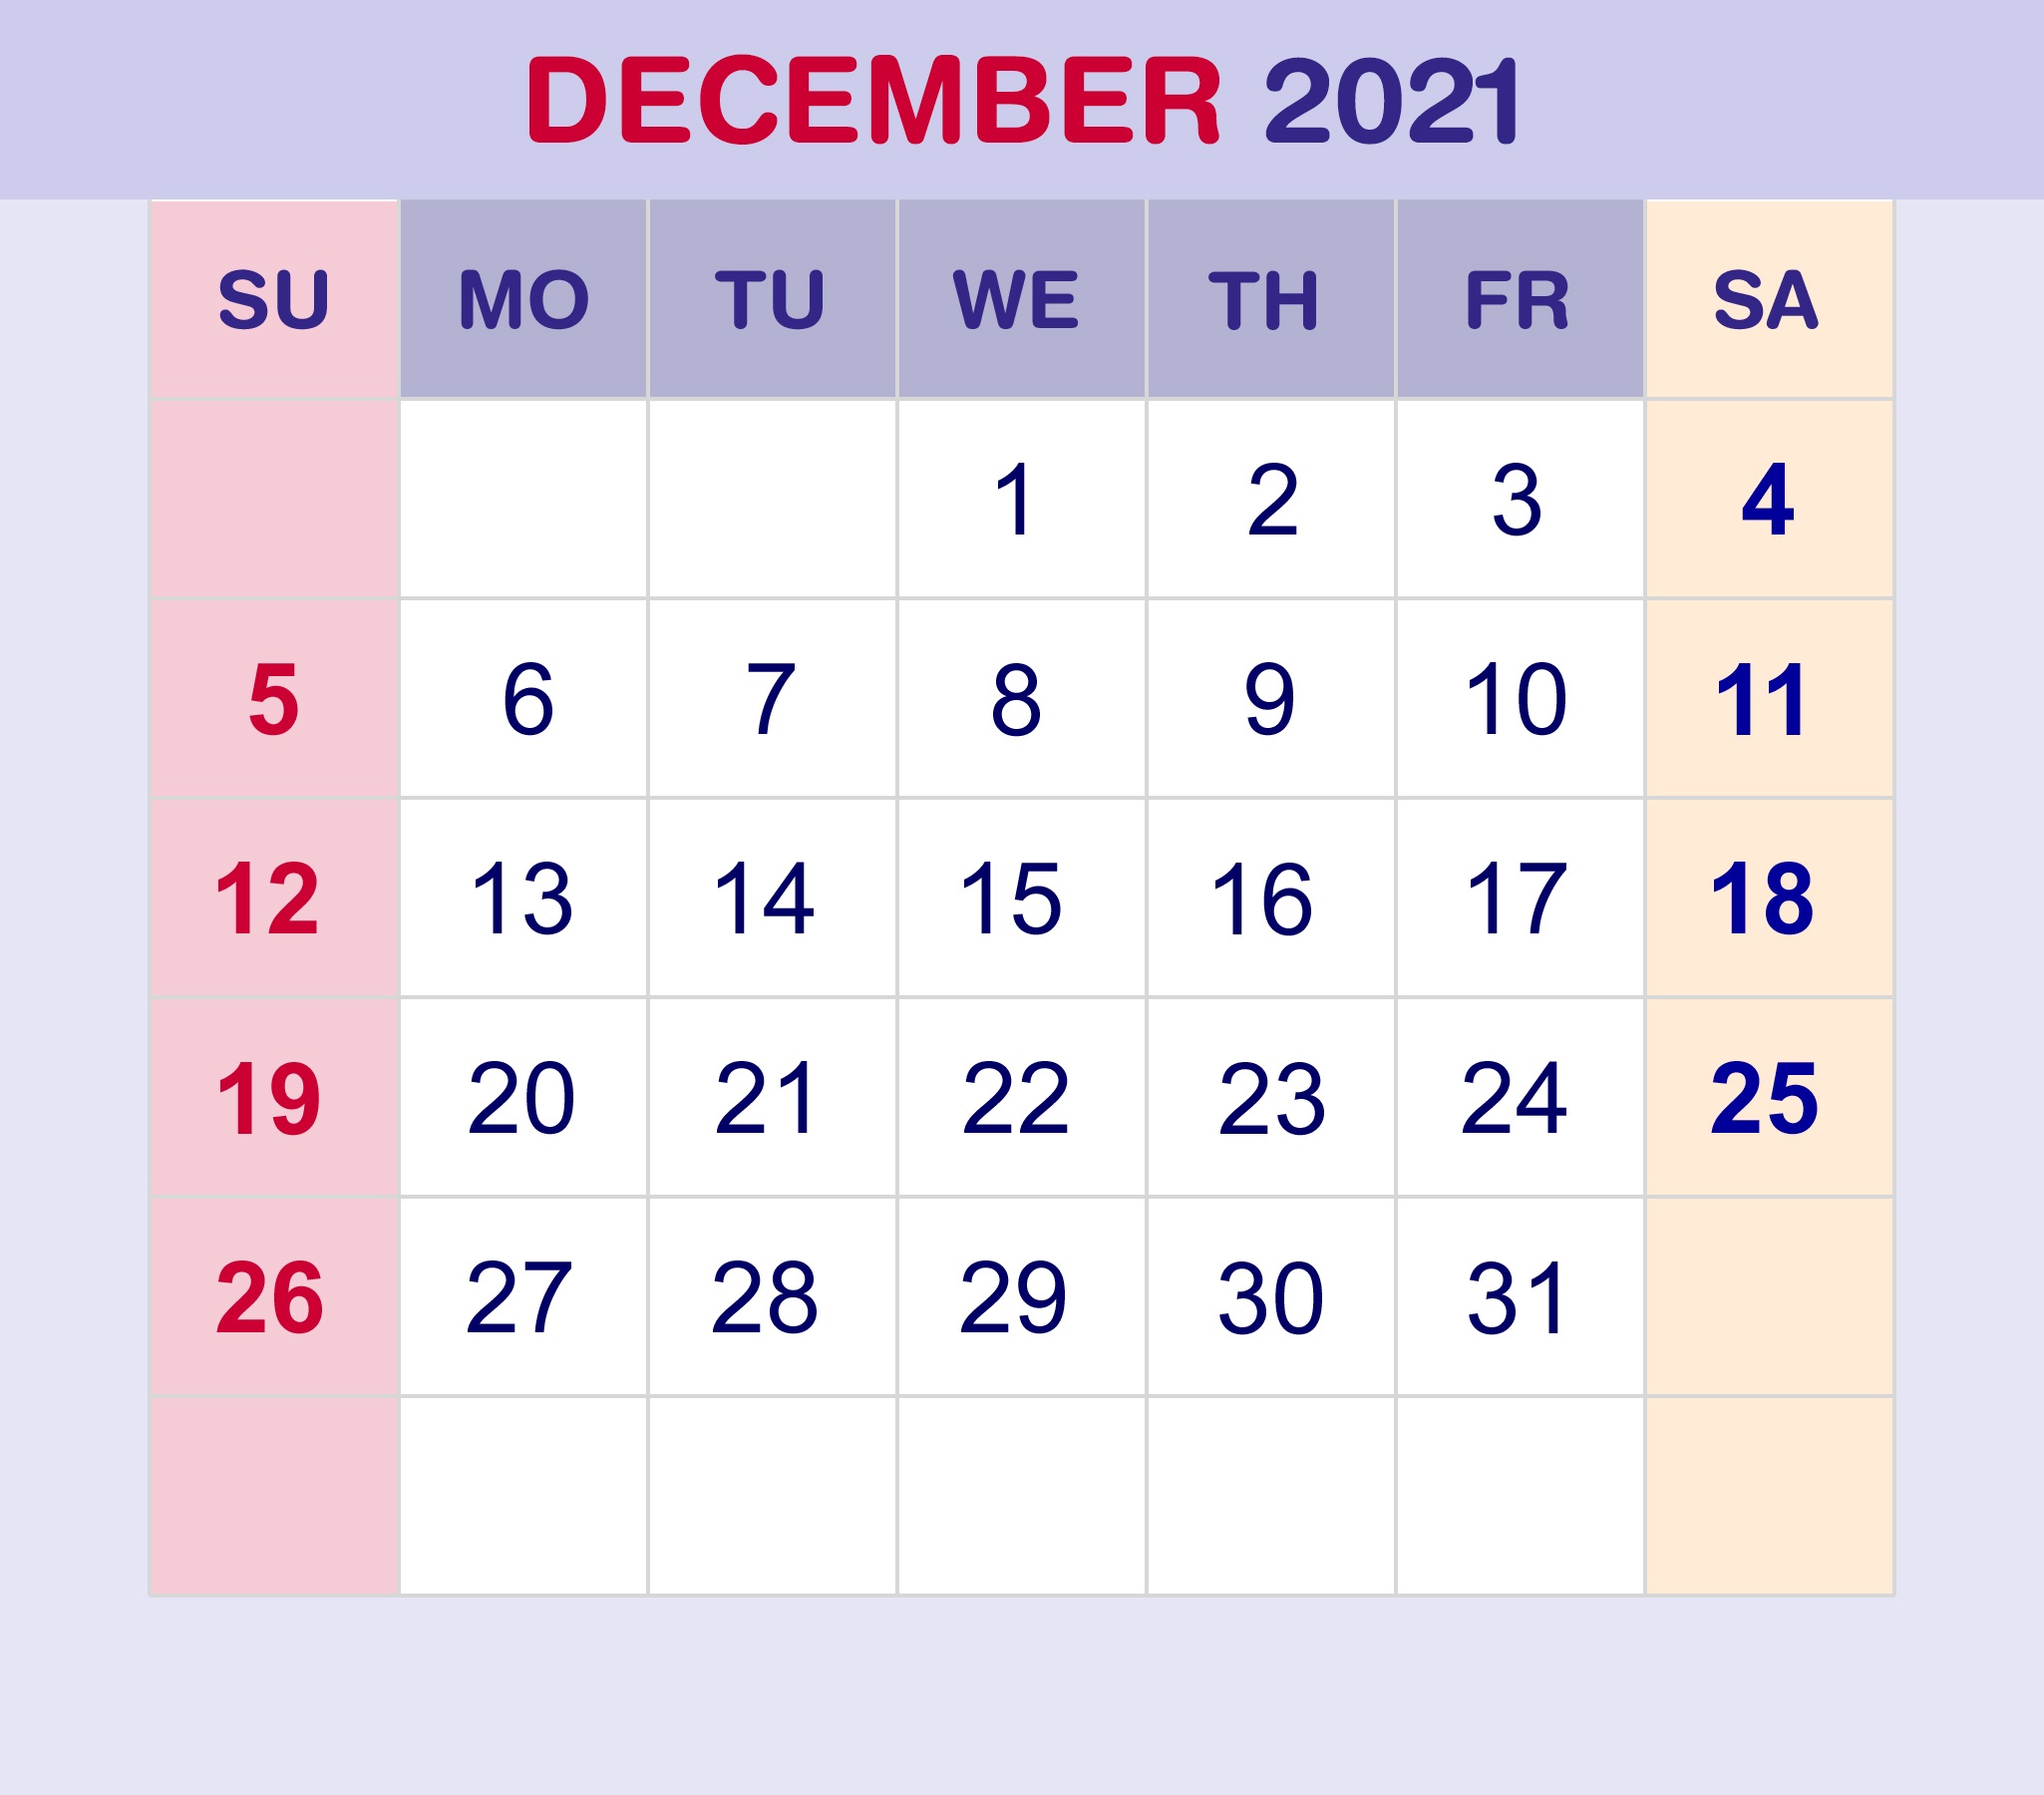 December 2021 Calendar With Holidays